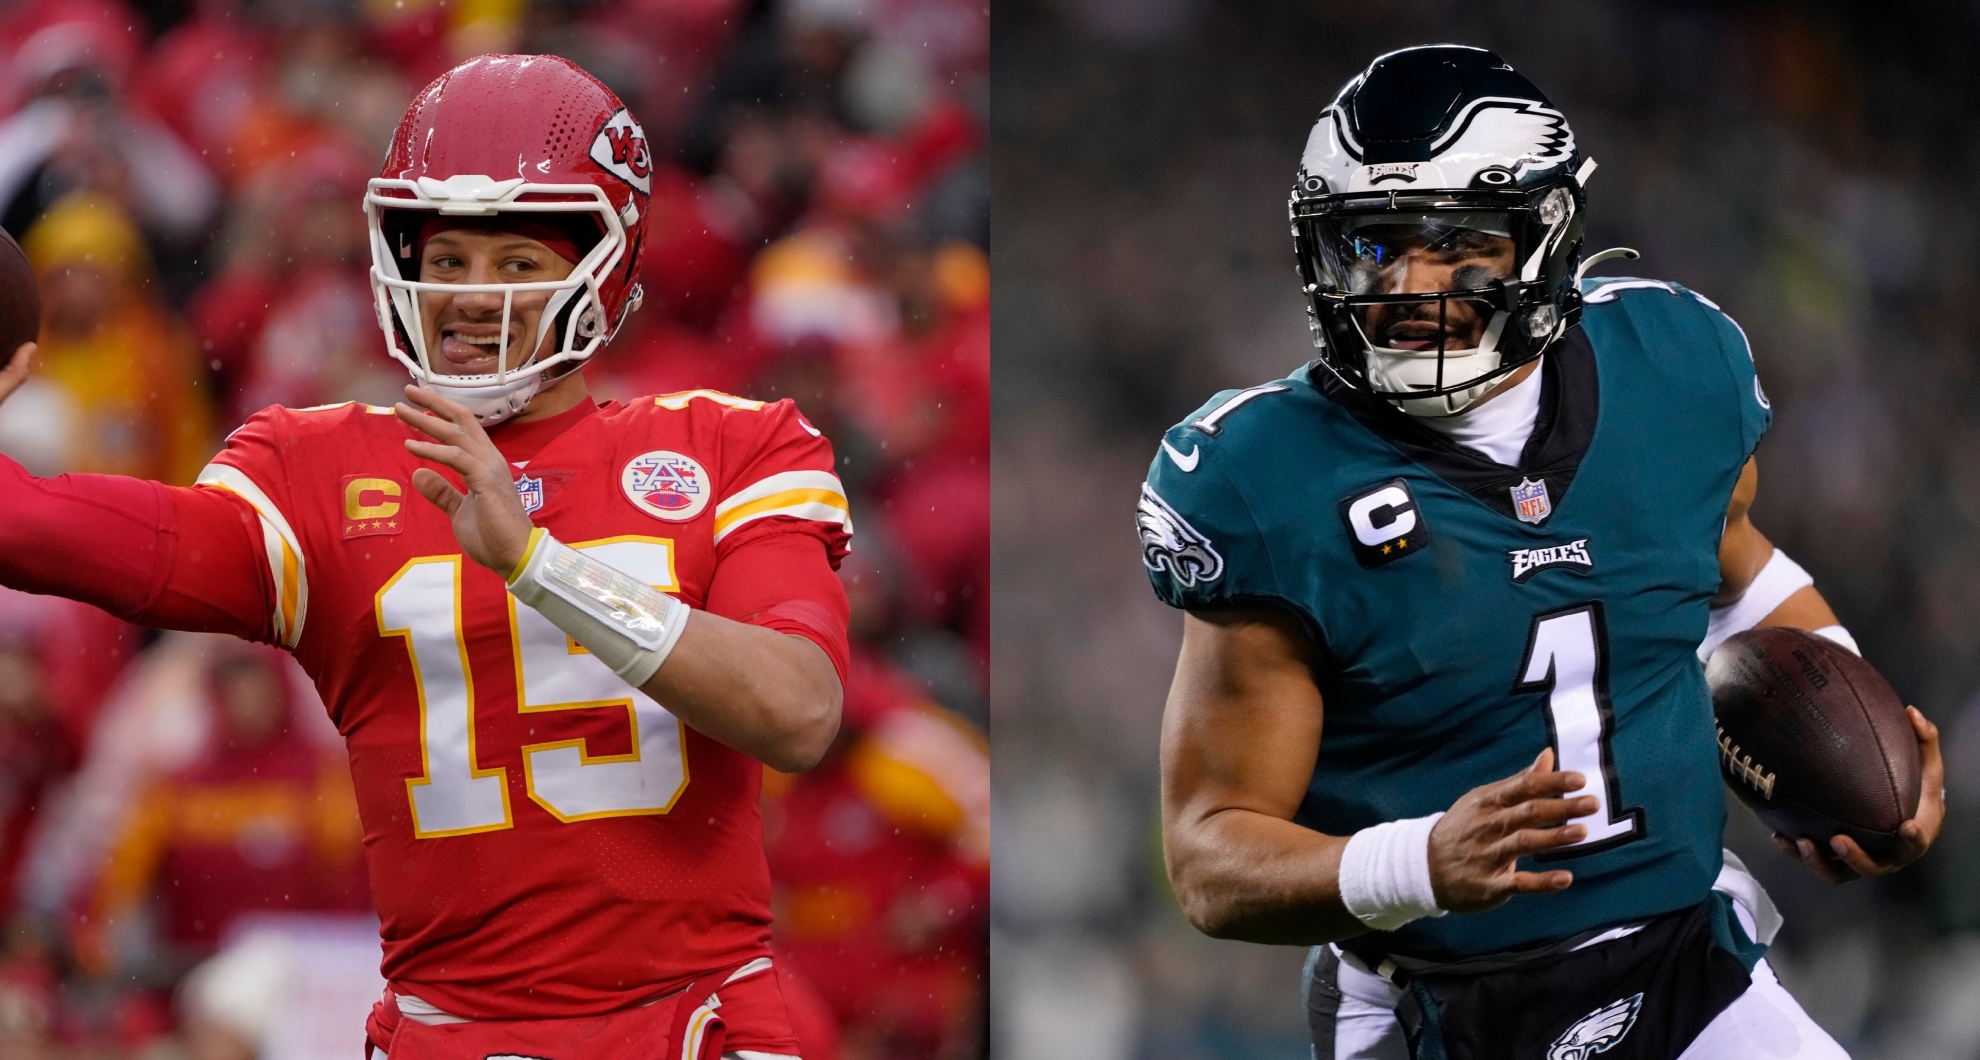 Analysis Two Black quarterbacks set for historic Super Bowl matchup